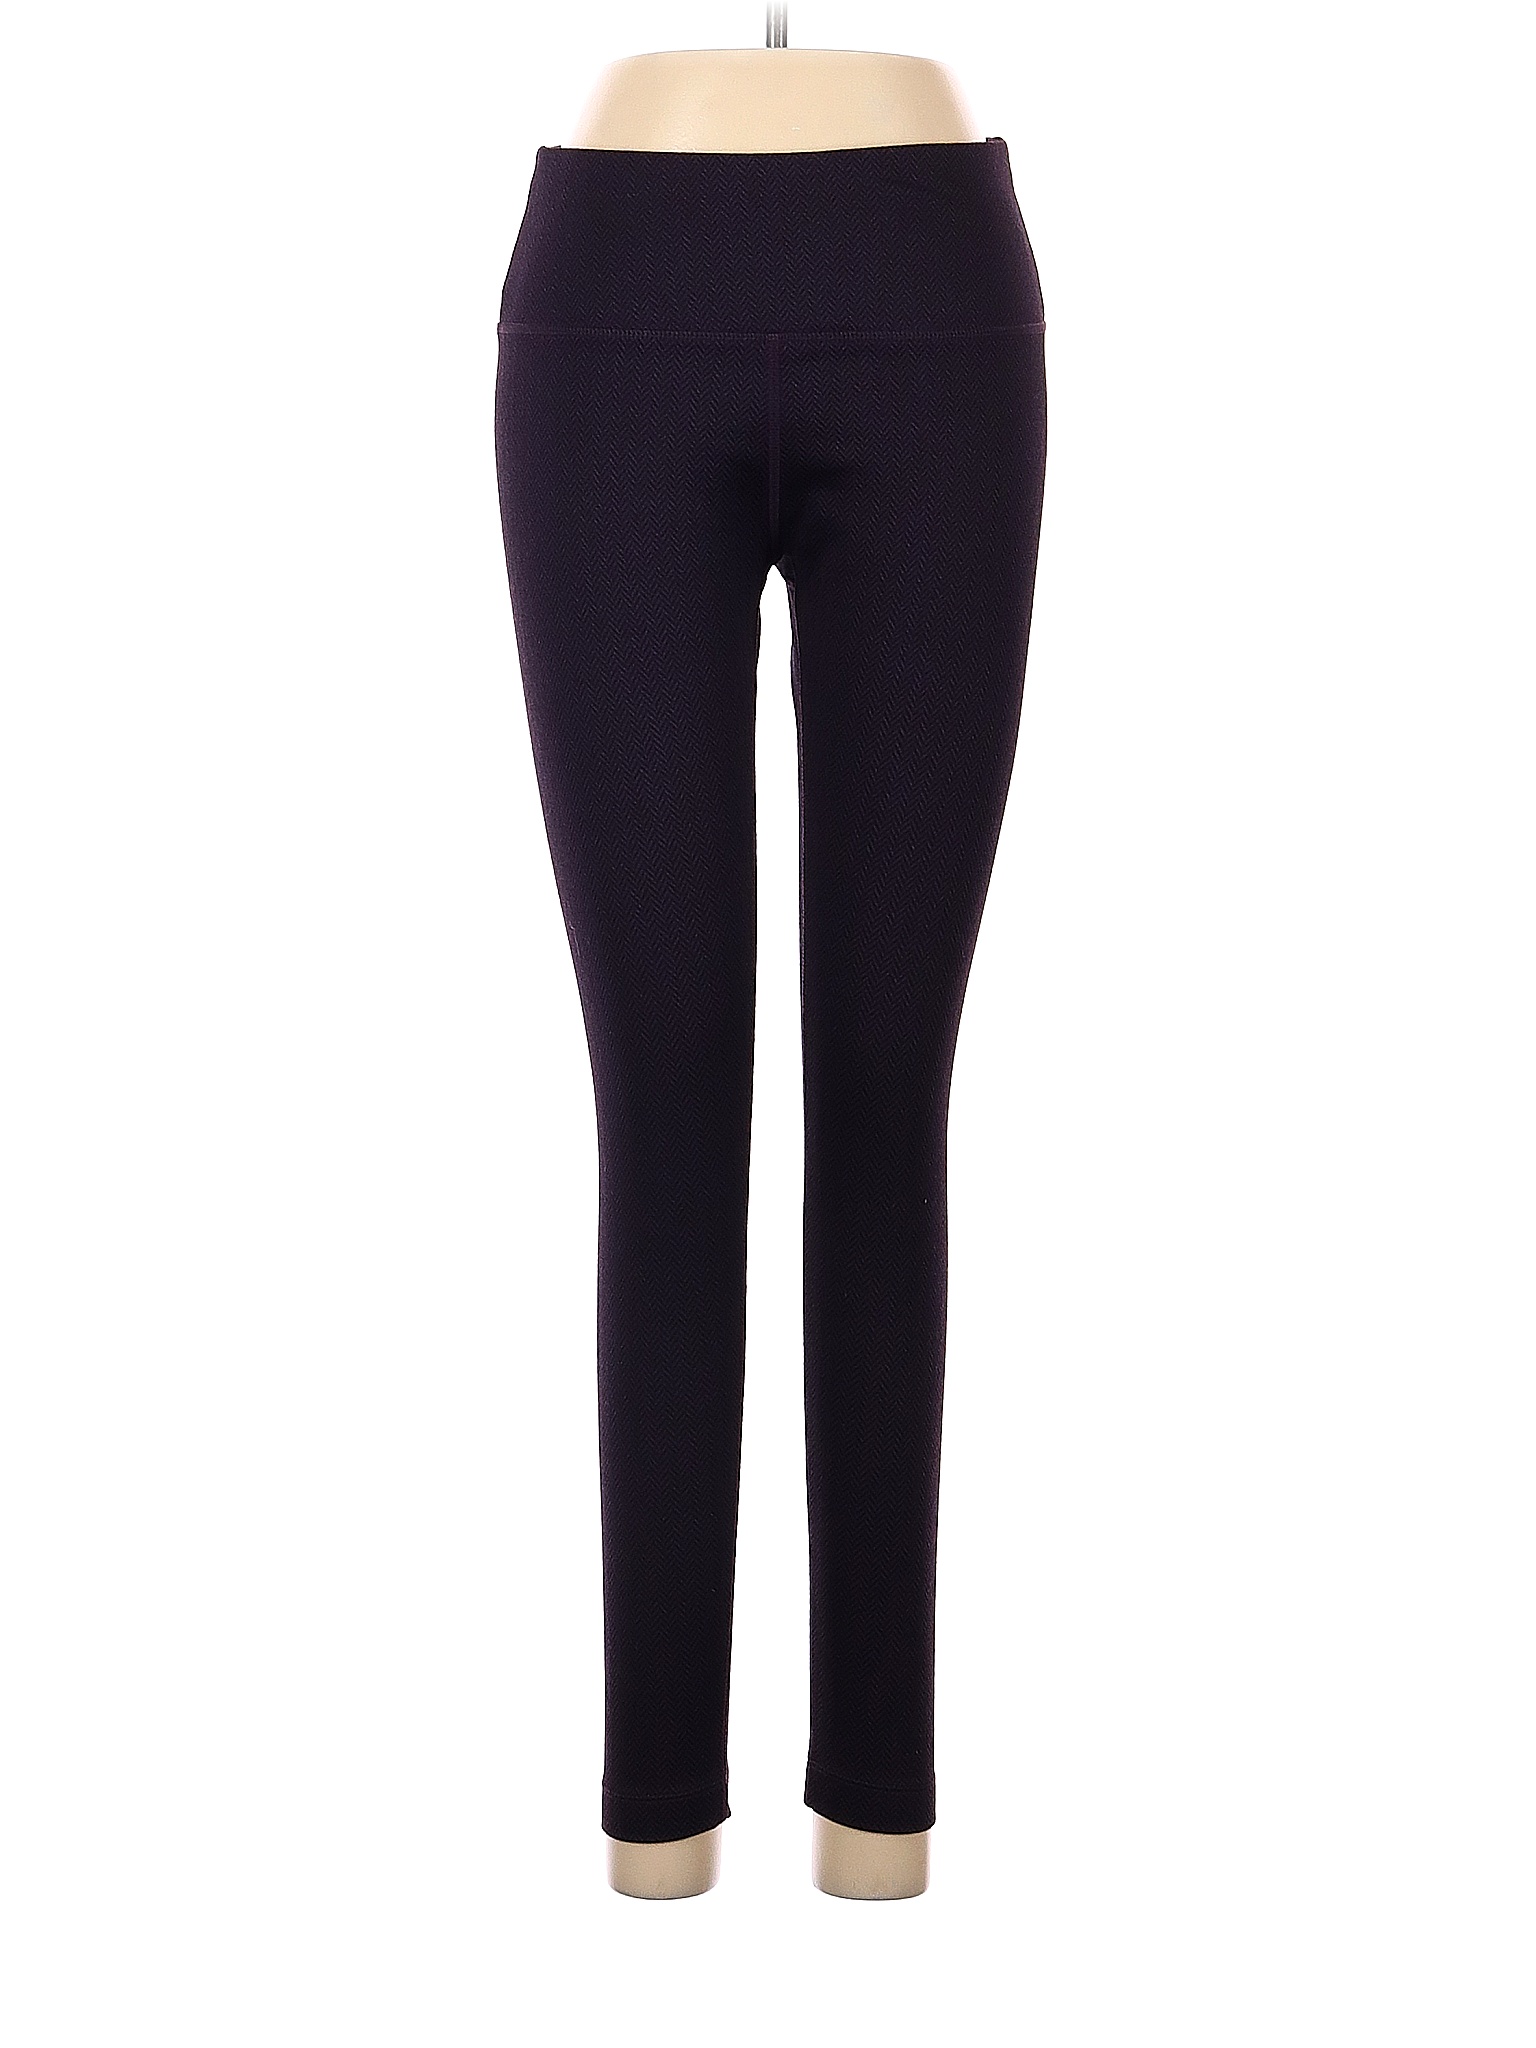 Mondetta Black Burgundy Yoga Pants Size M - 80% off | thredUP